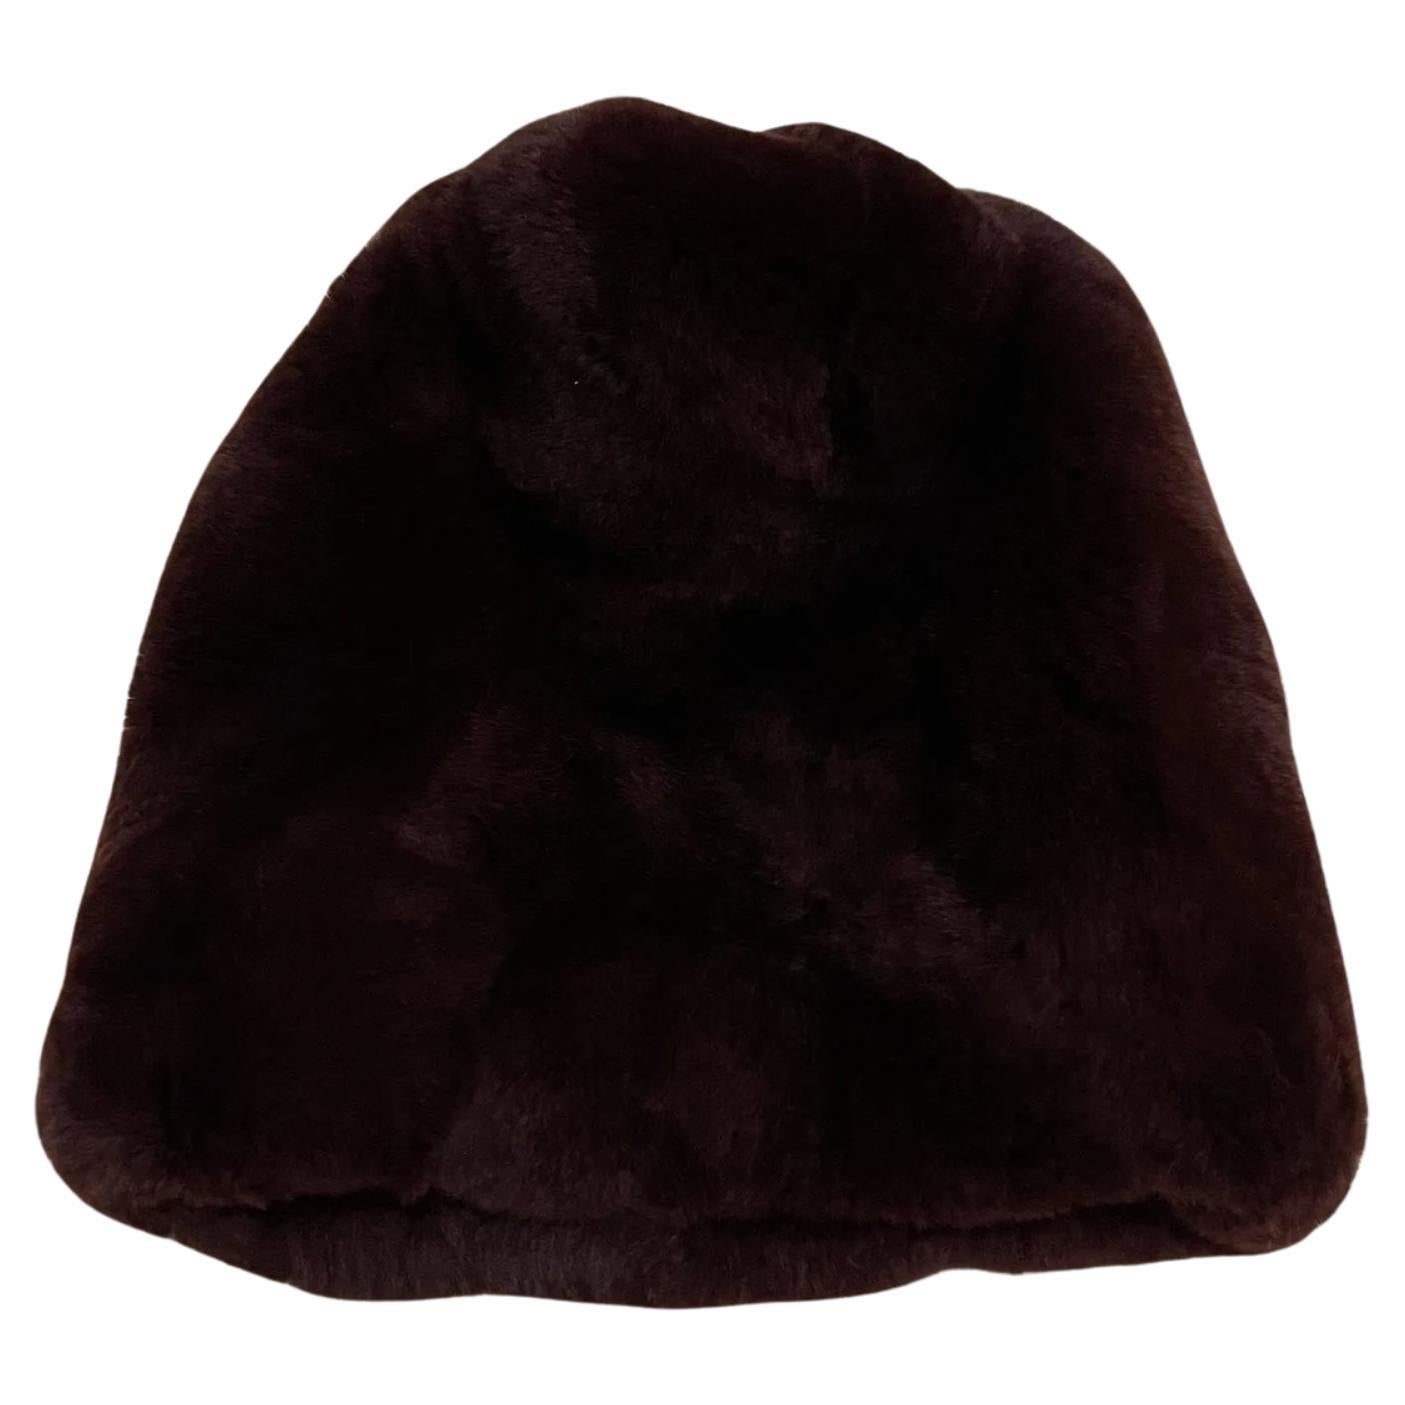 How long do fur hats last?